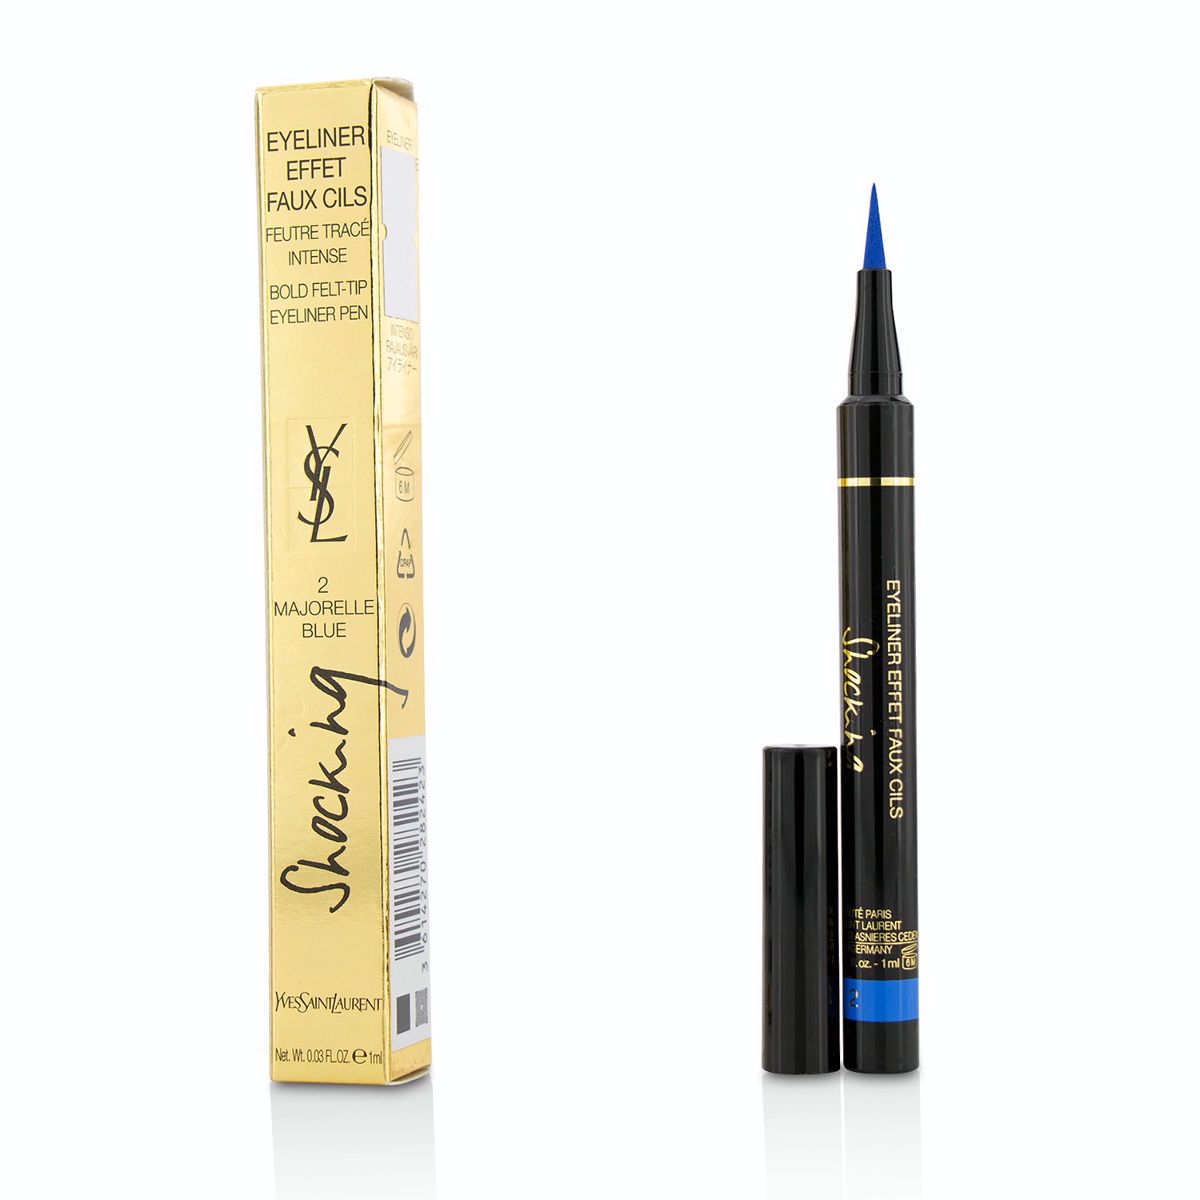 Eyeliner Effet Faux Cils Shocking (Bold Felt Tip Eyeliner Pen) - # 2 Majorelle Blue Yves Saint Laurent Image